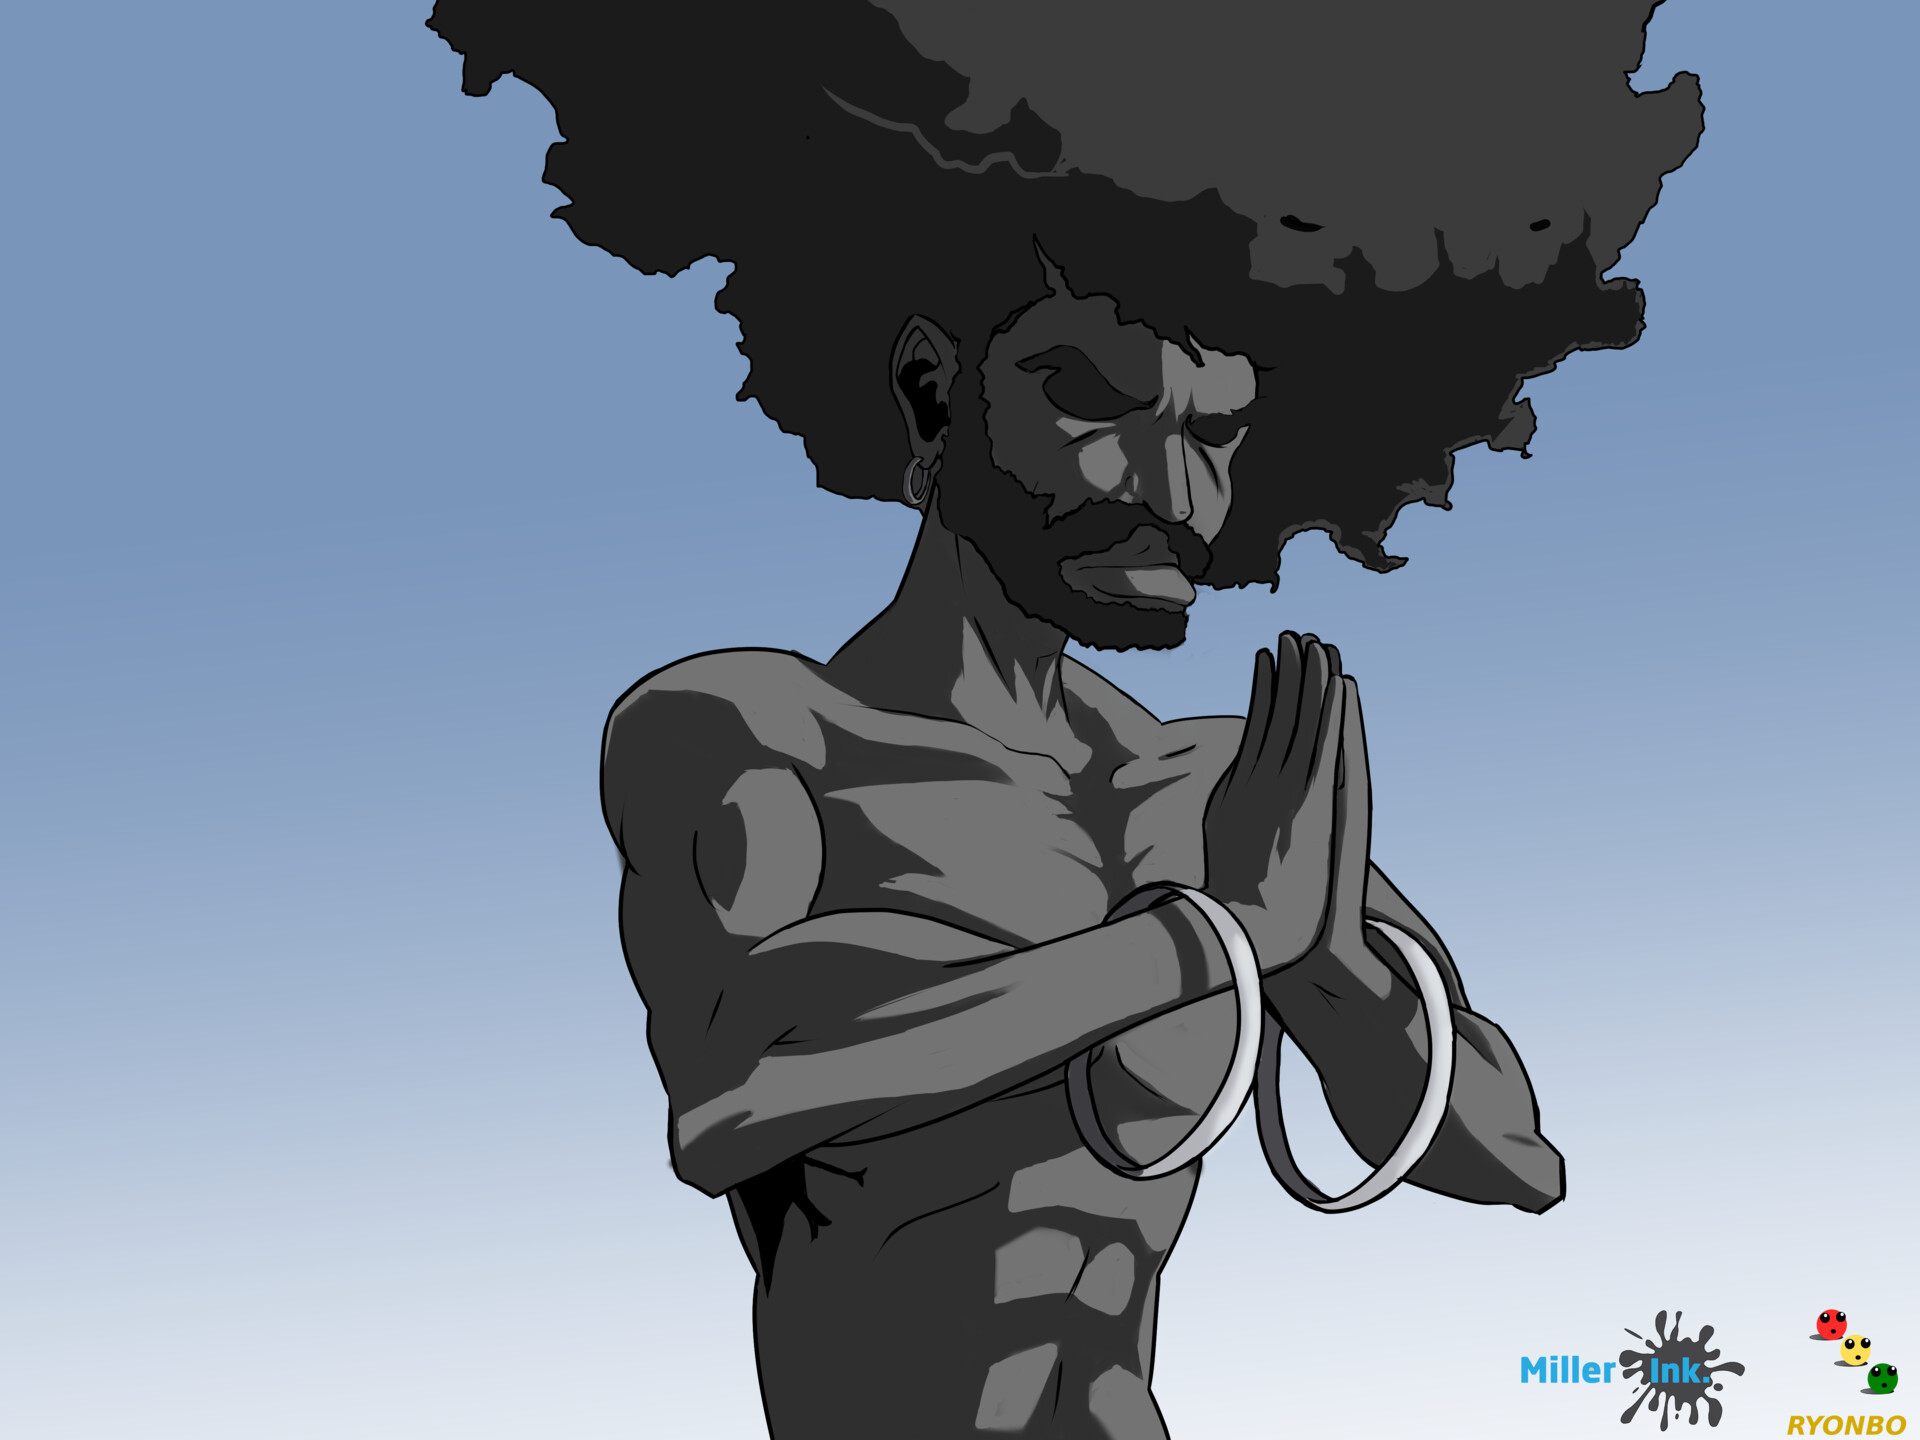 ArtStation - Fanart - Afro Samurai